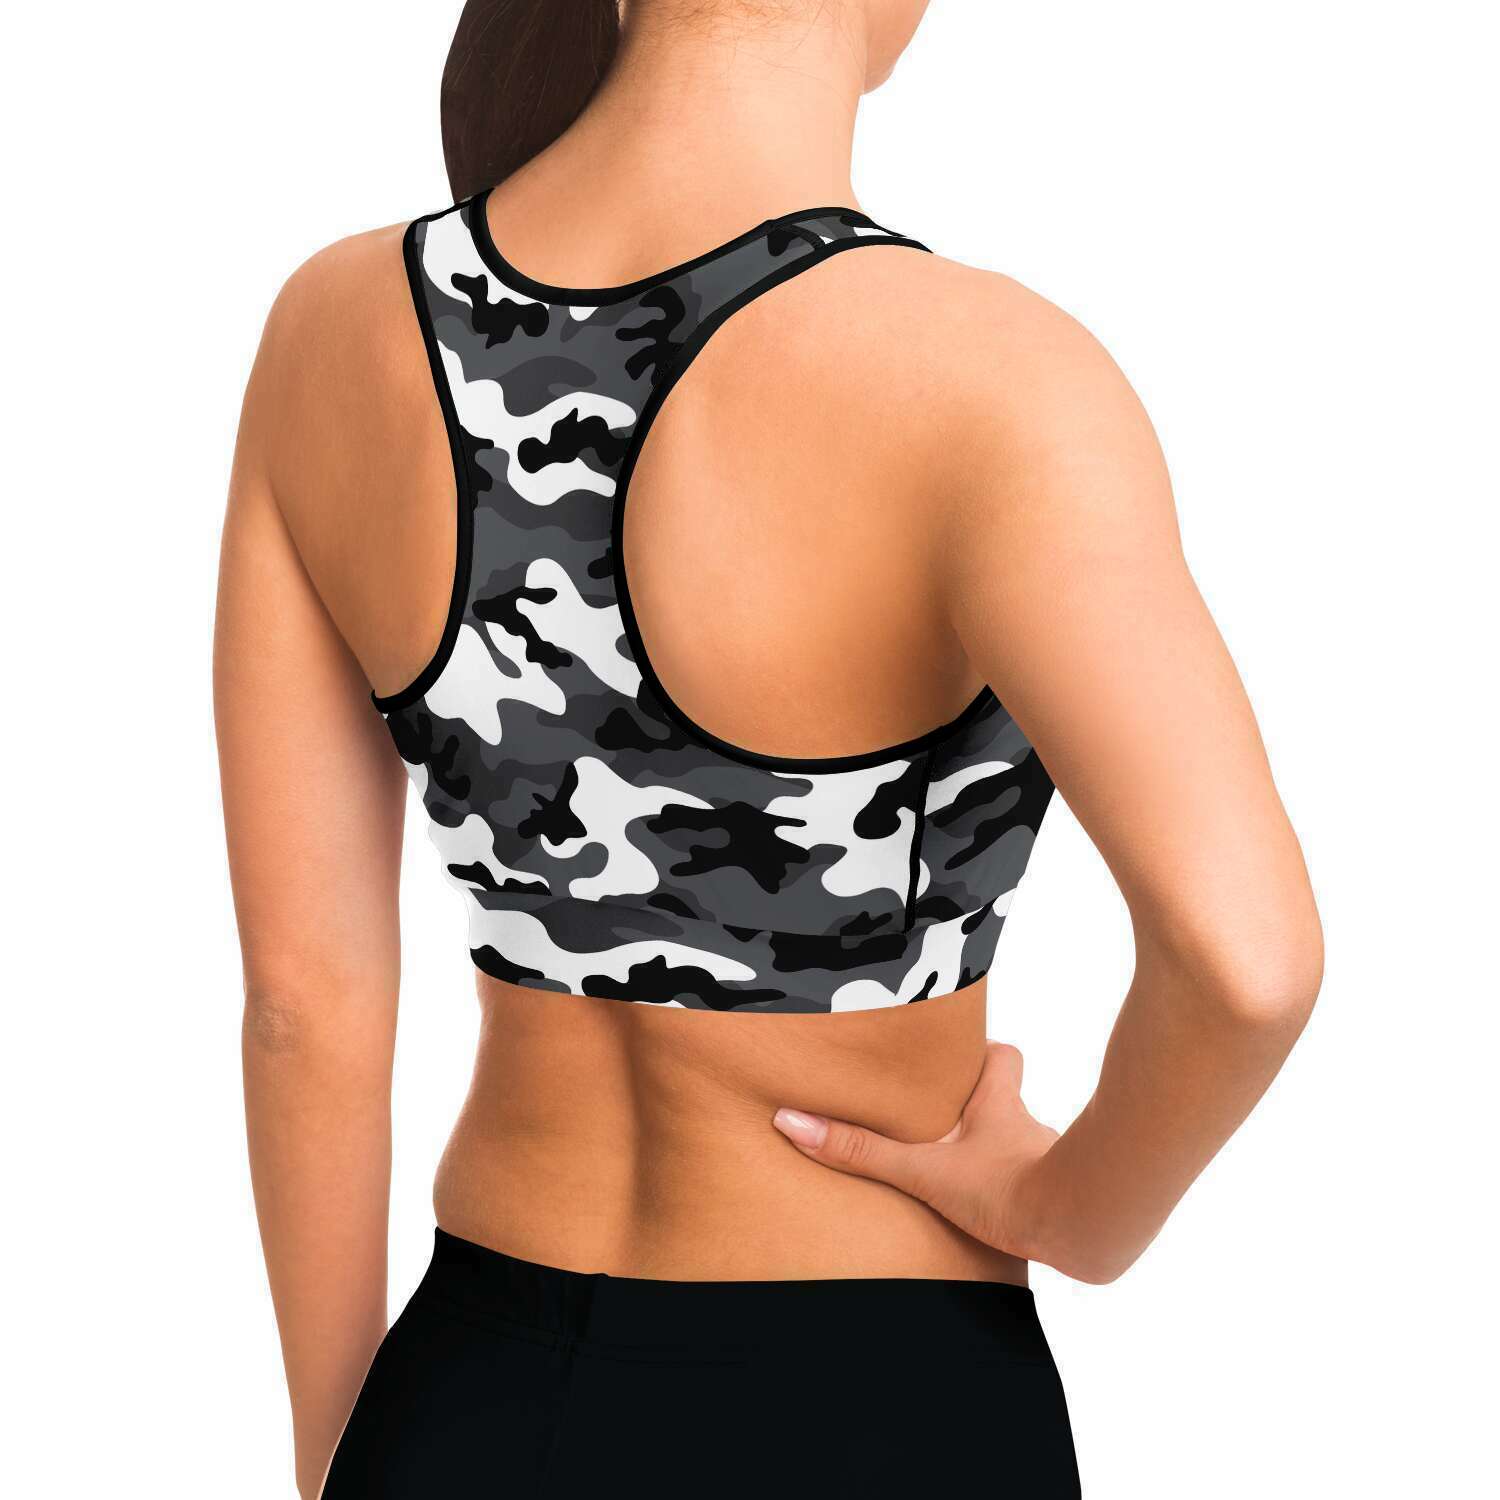 Women's Black White Camouflage Athletic Sports Bra Model Right